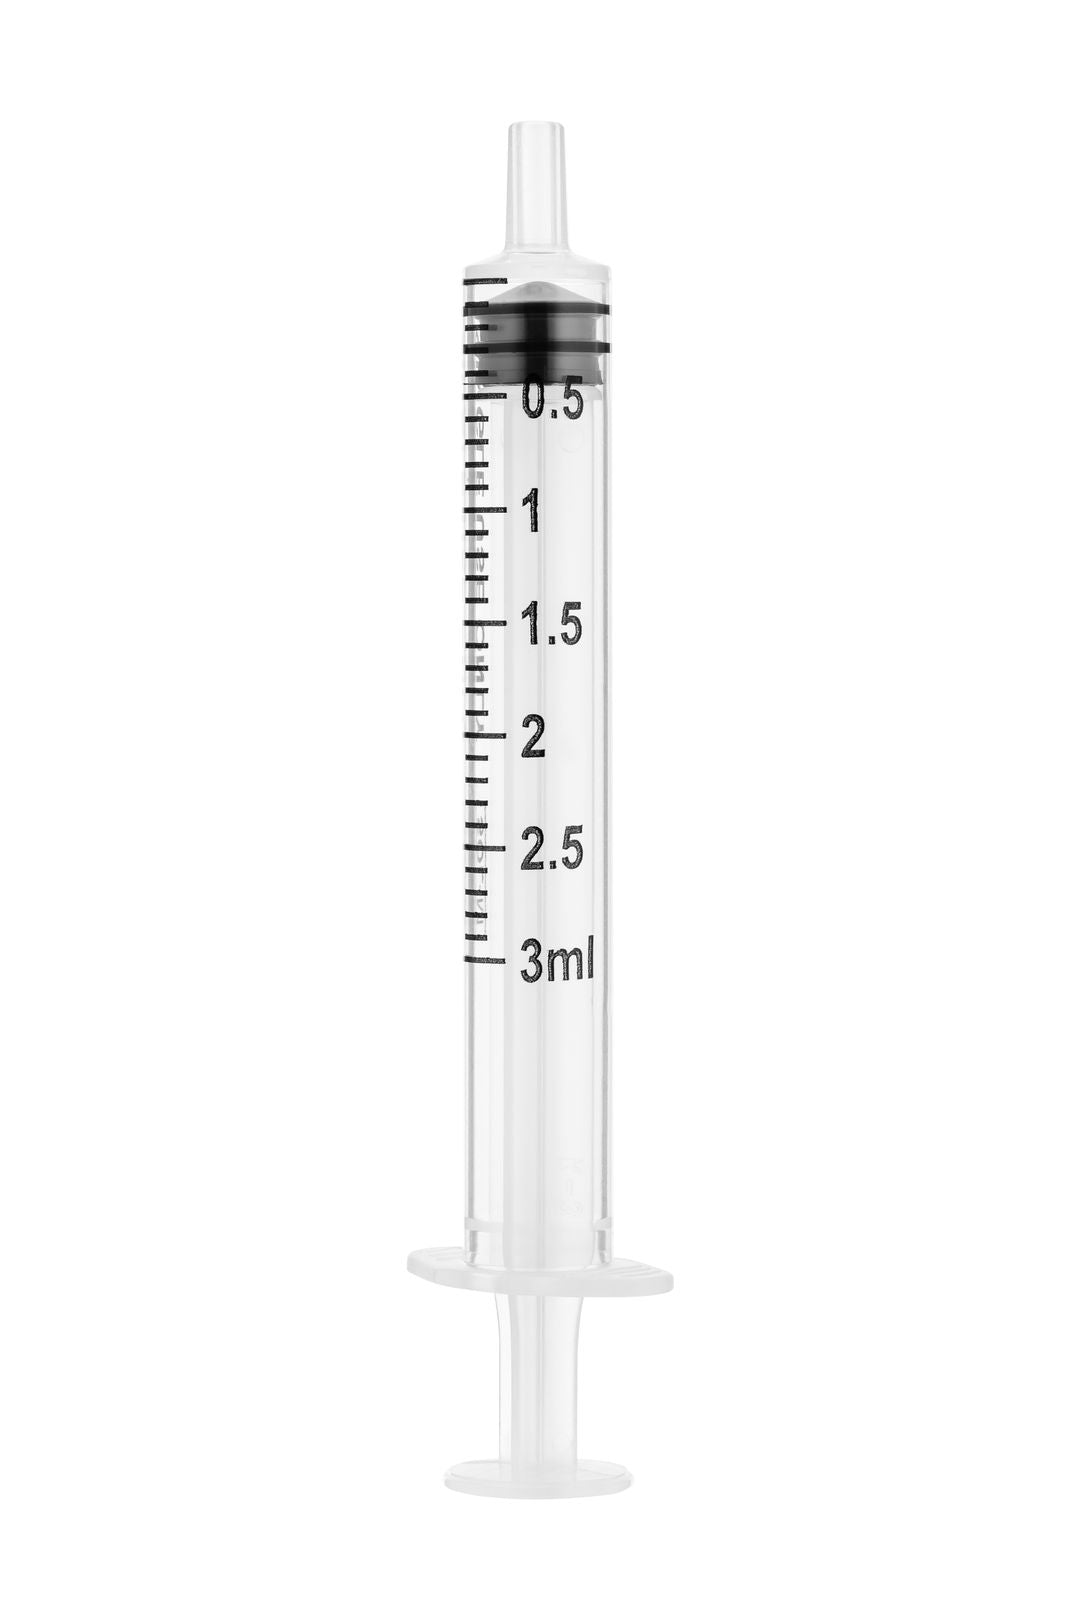 Case/1000 - SOL-M 10ml Luer Lock Syringe w/o Needle (bulk, non-sterile)